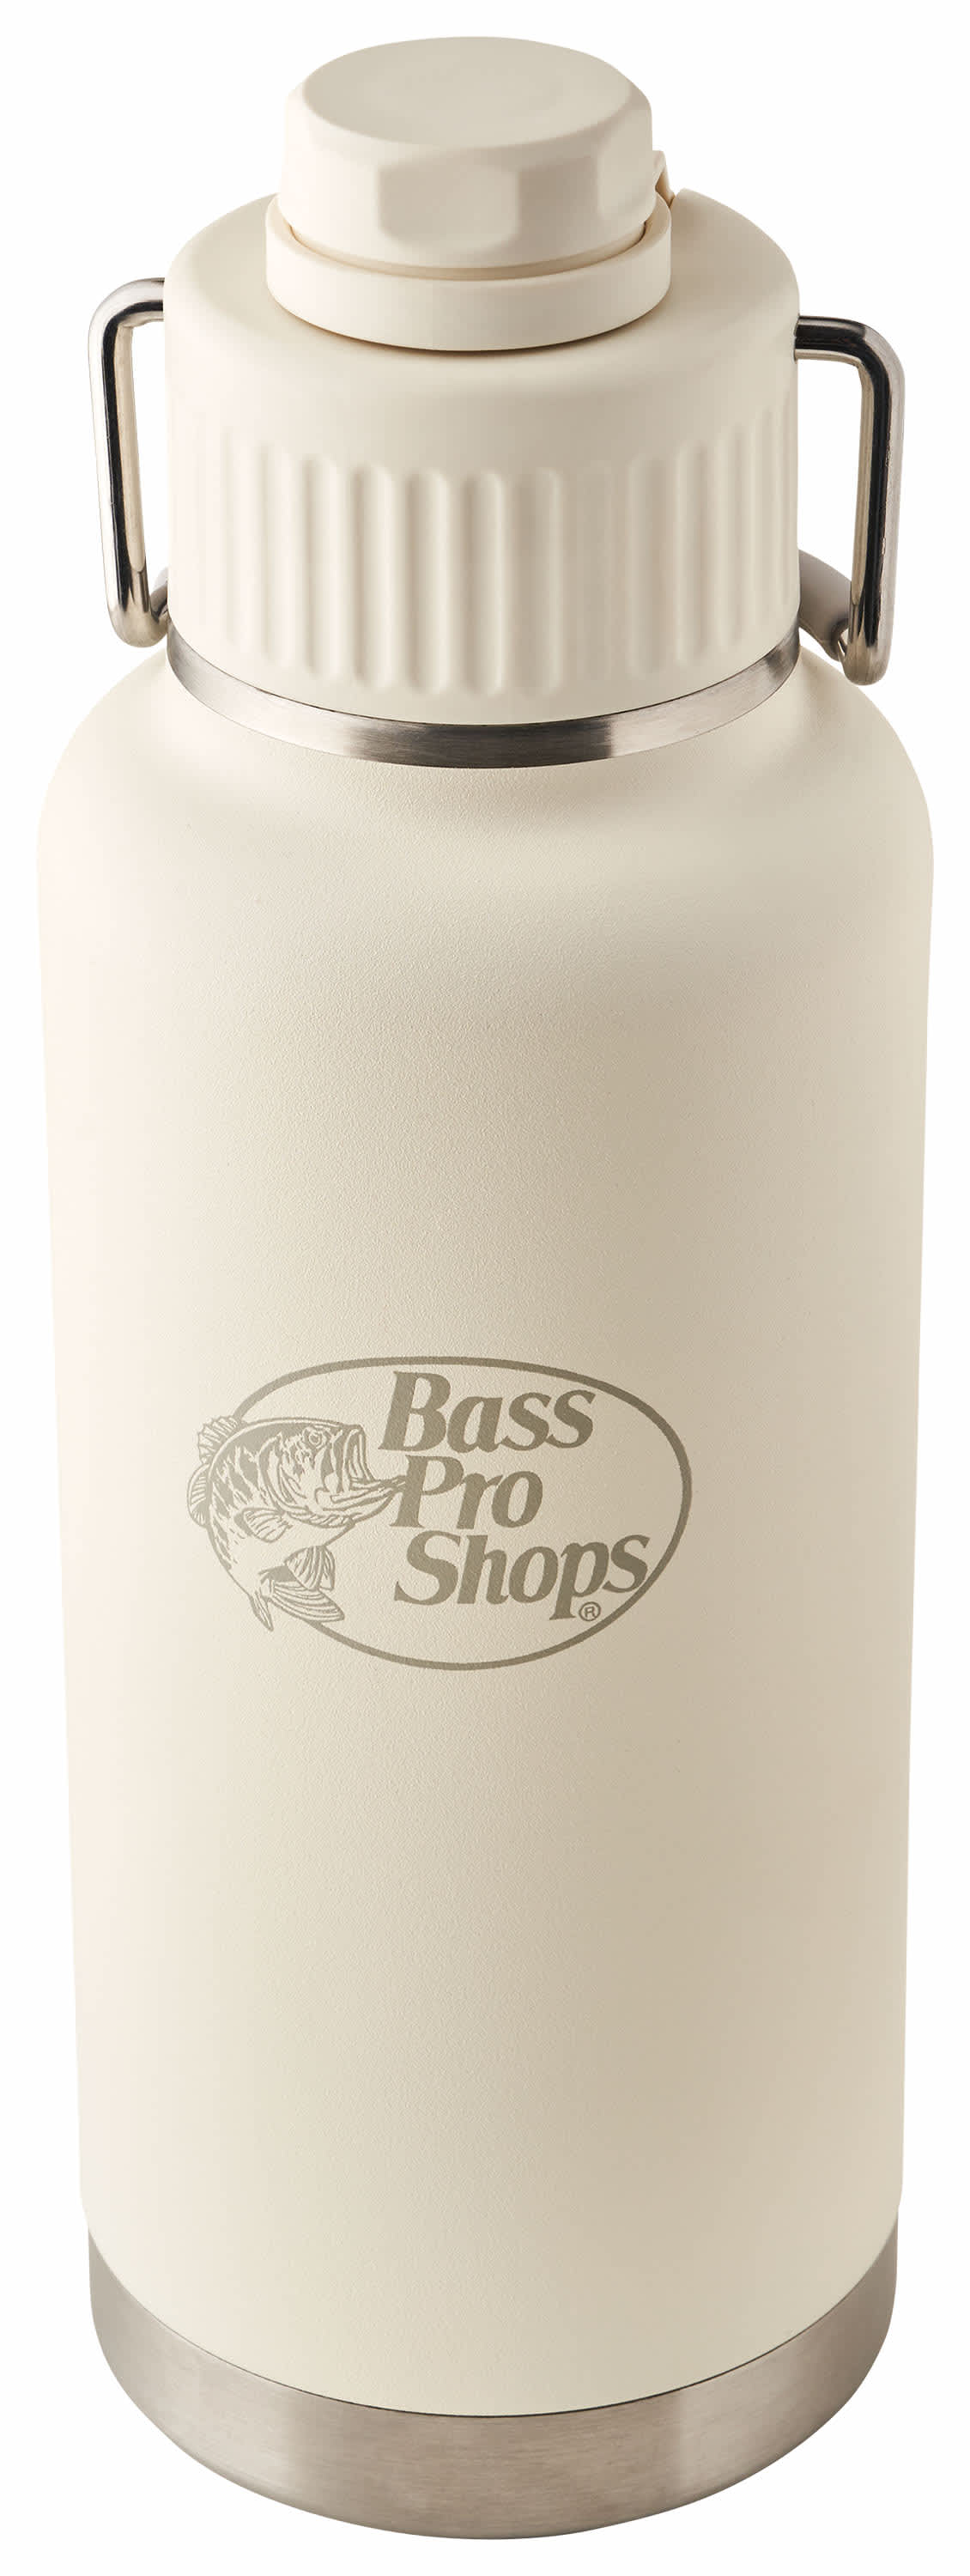 Bass Pro Shops® Water Bottle with Spout Lid